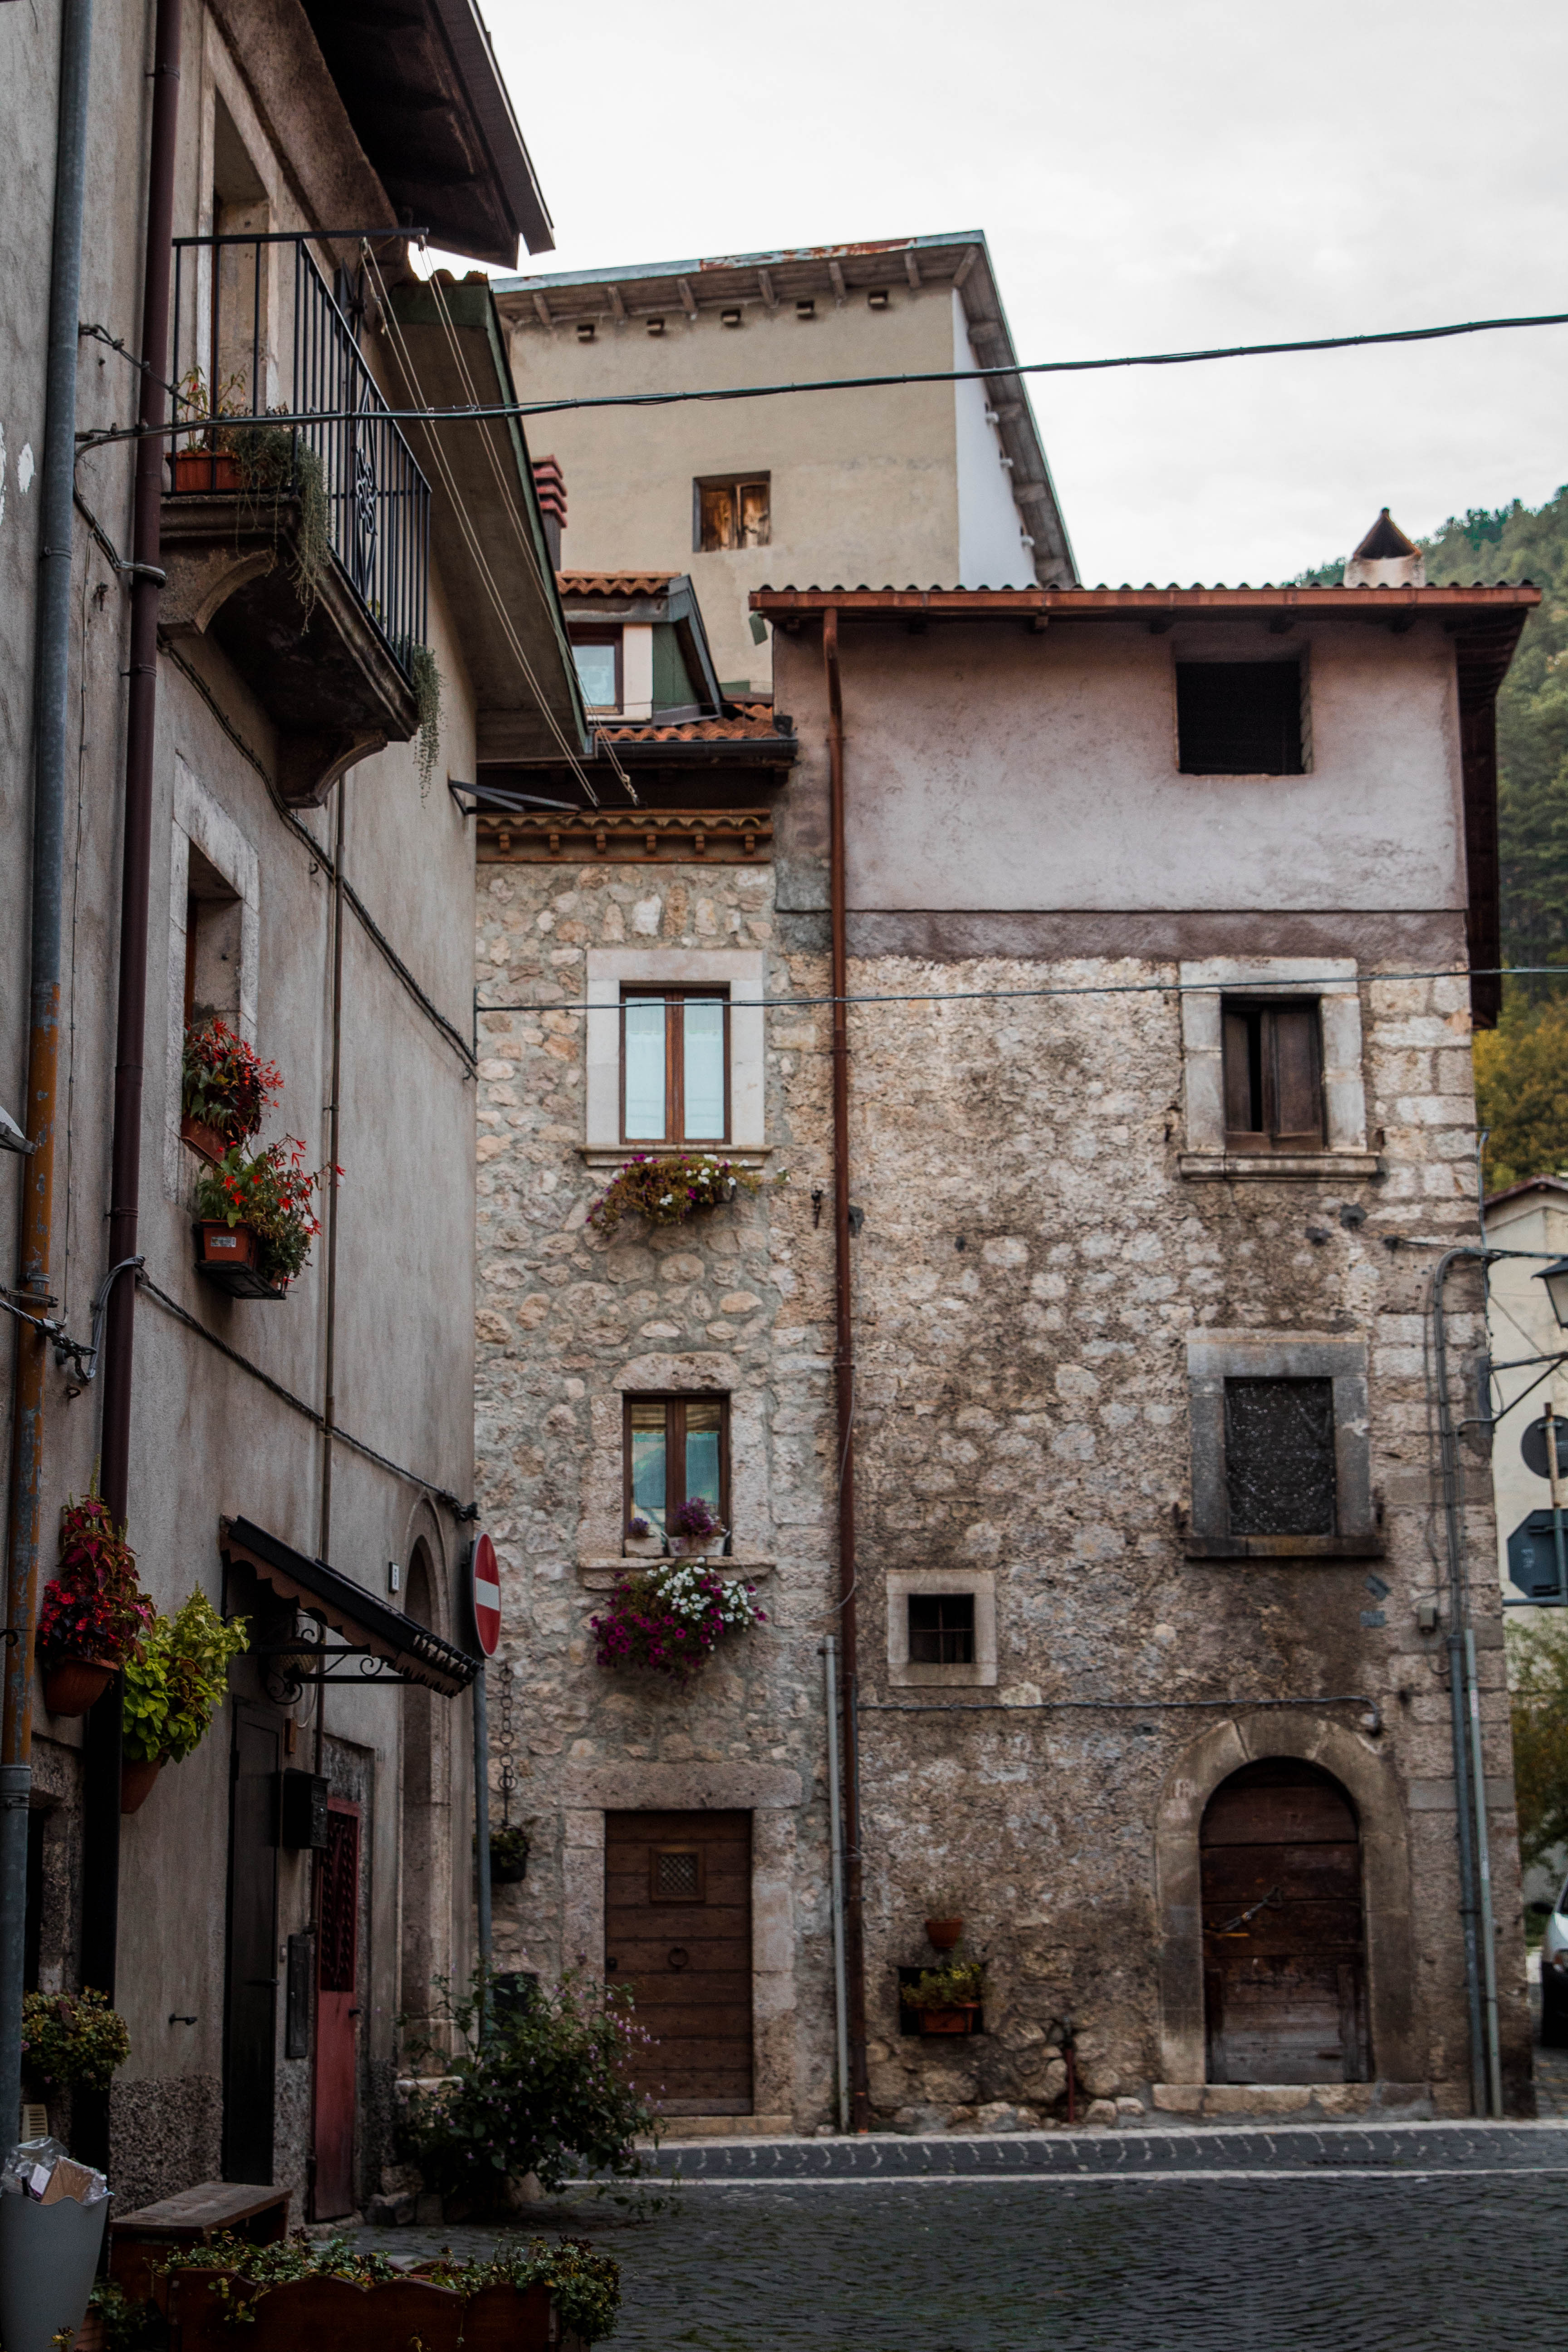 Abruzzo, Italy images